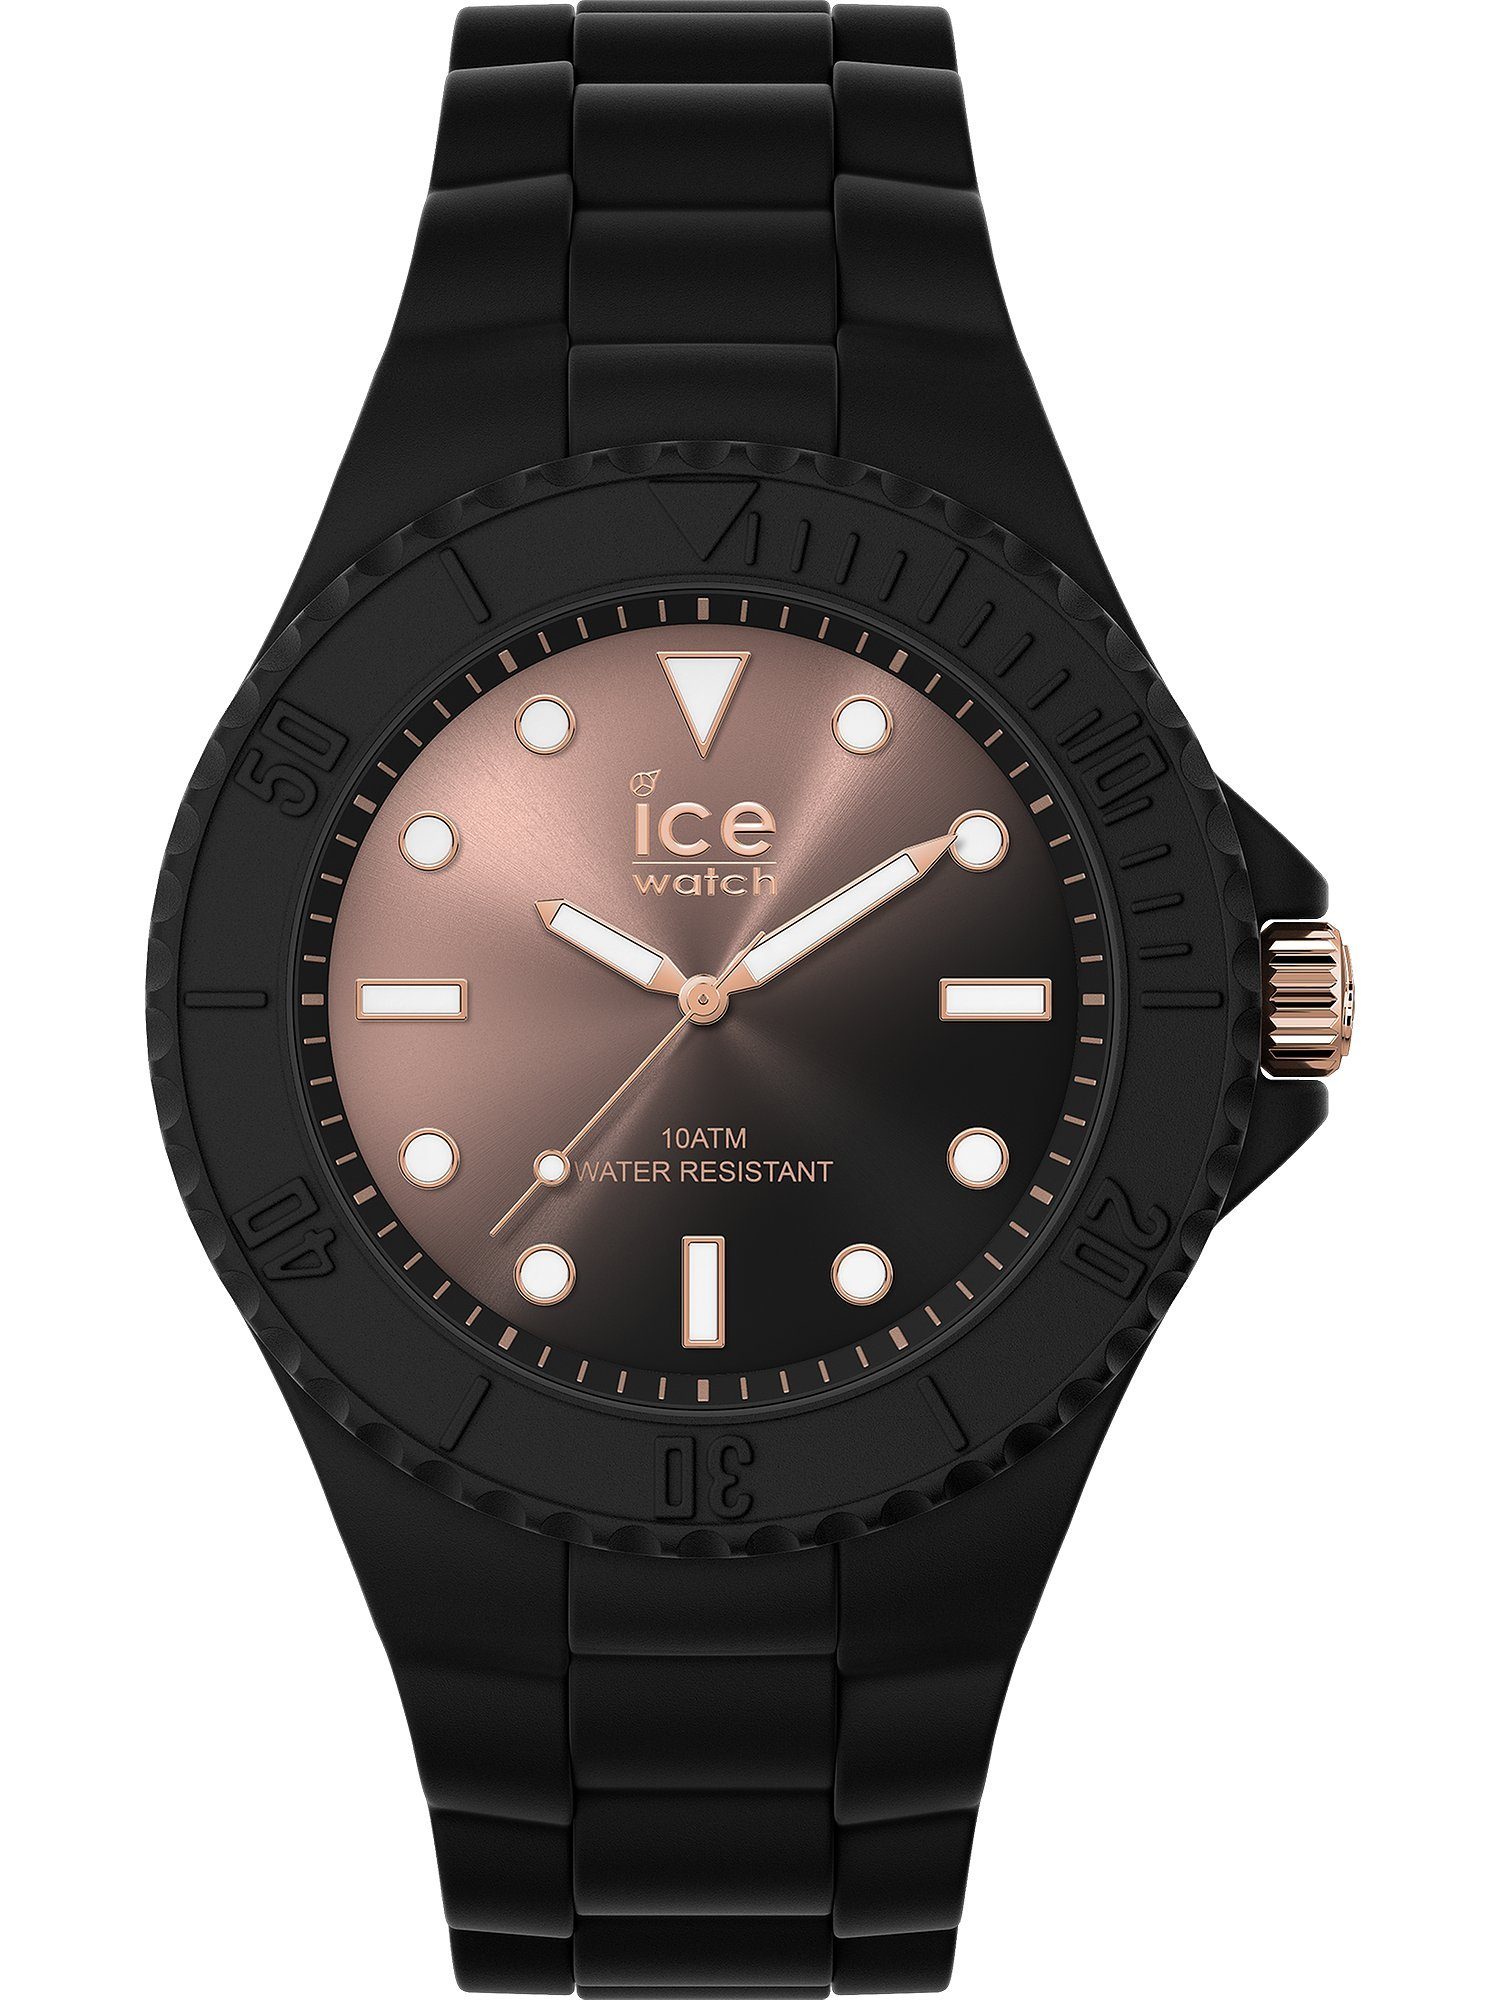 ICE Herren-Uhren Quarzuhr Kunststoff Watch Quarz, Analog Material: ice-watch Klassikuhr,